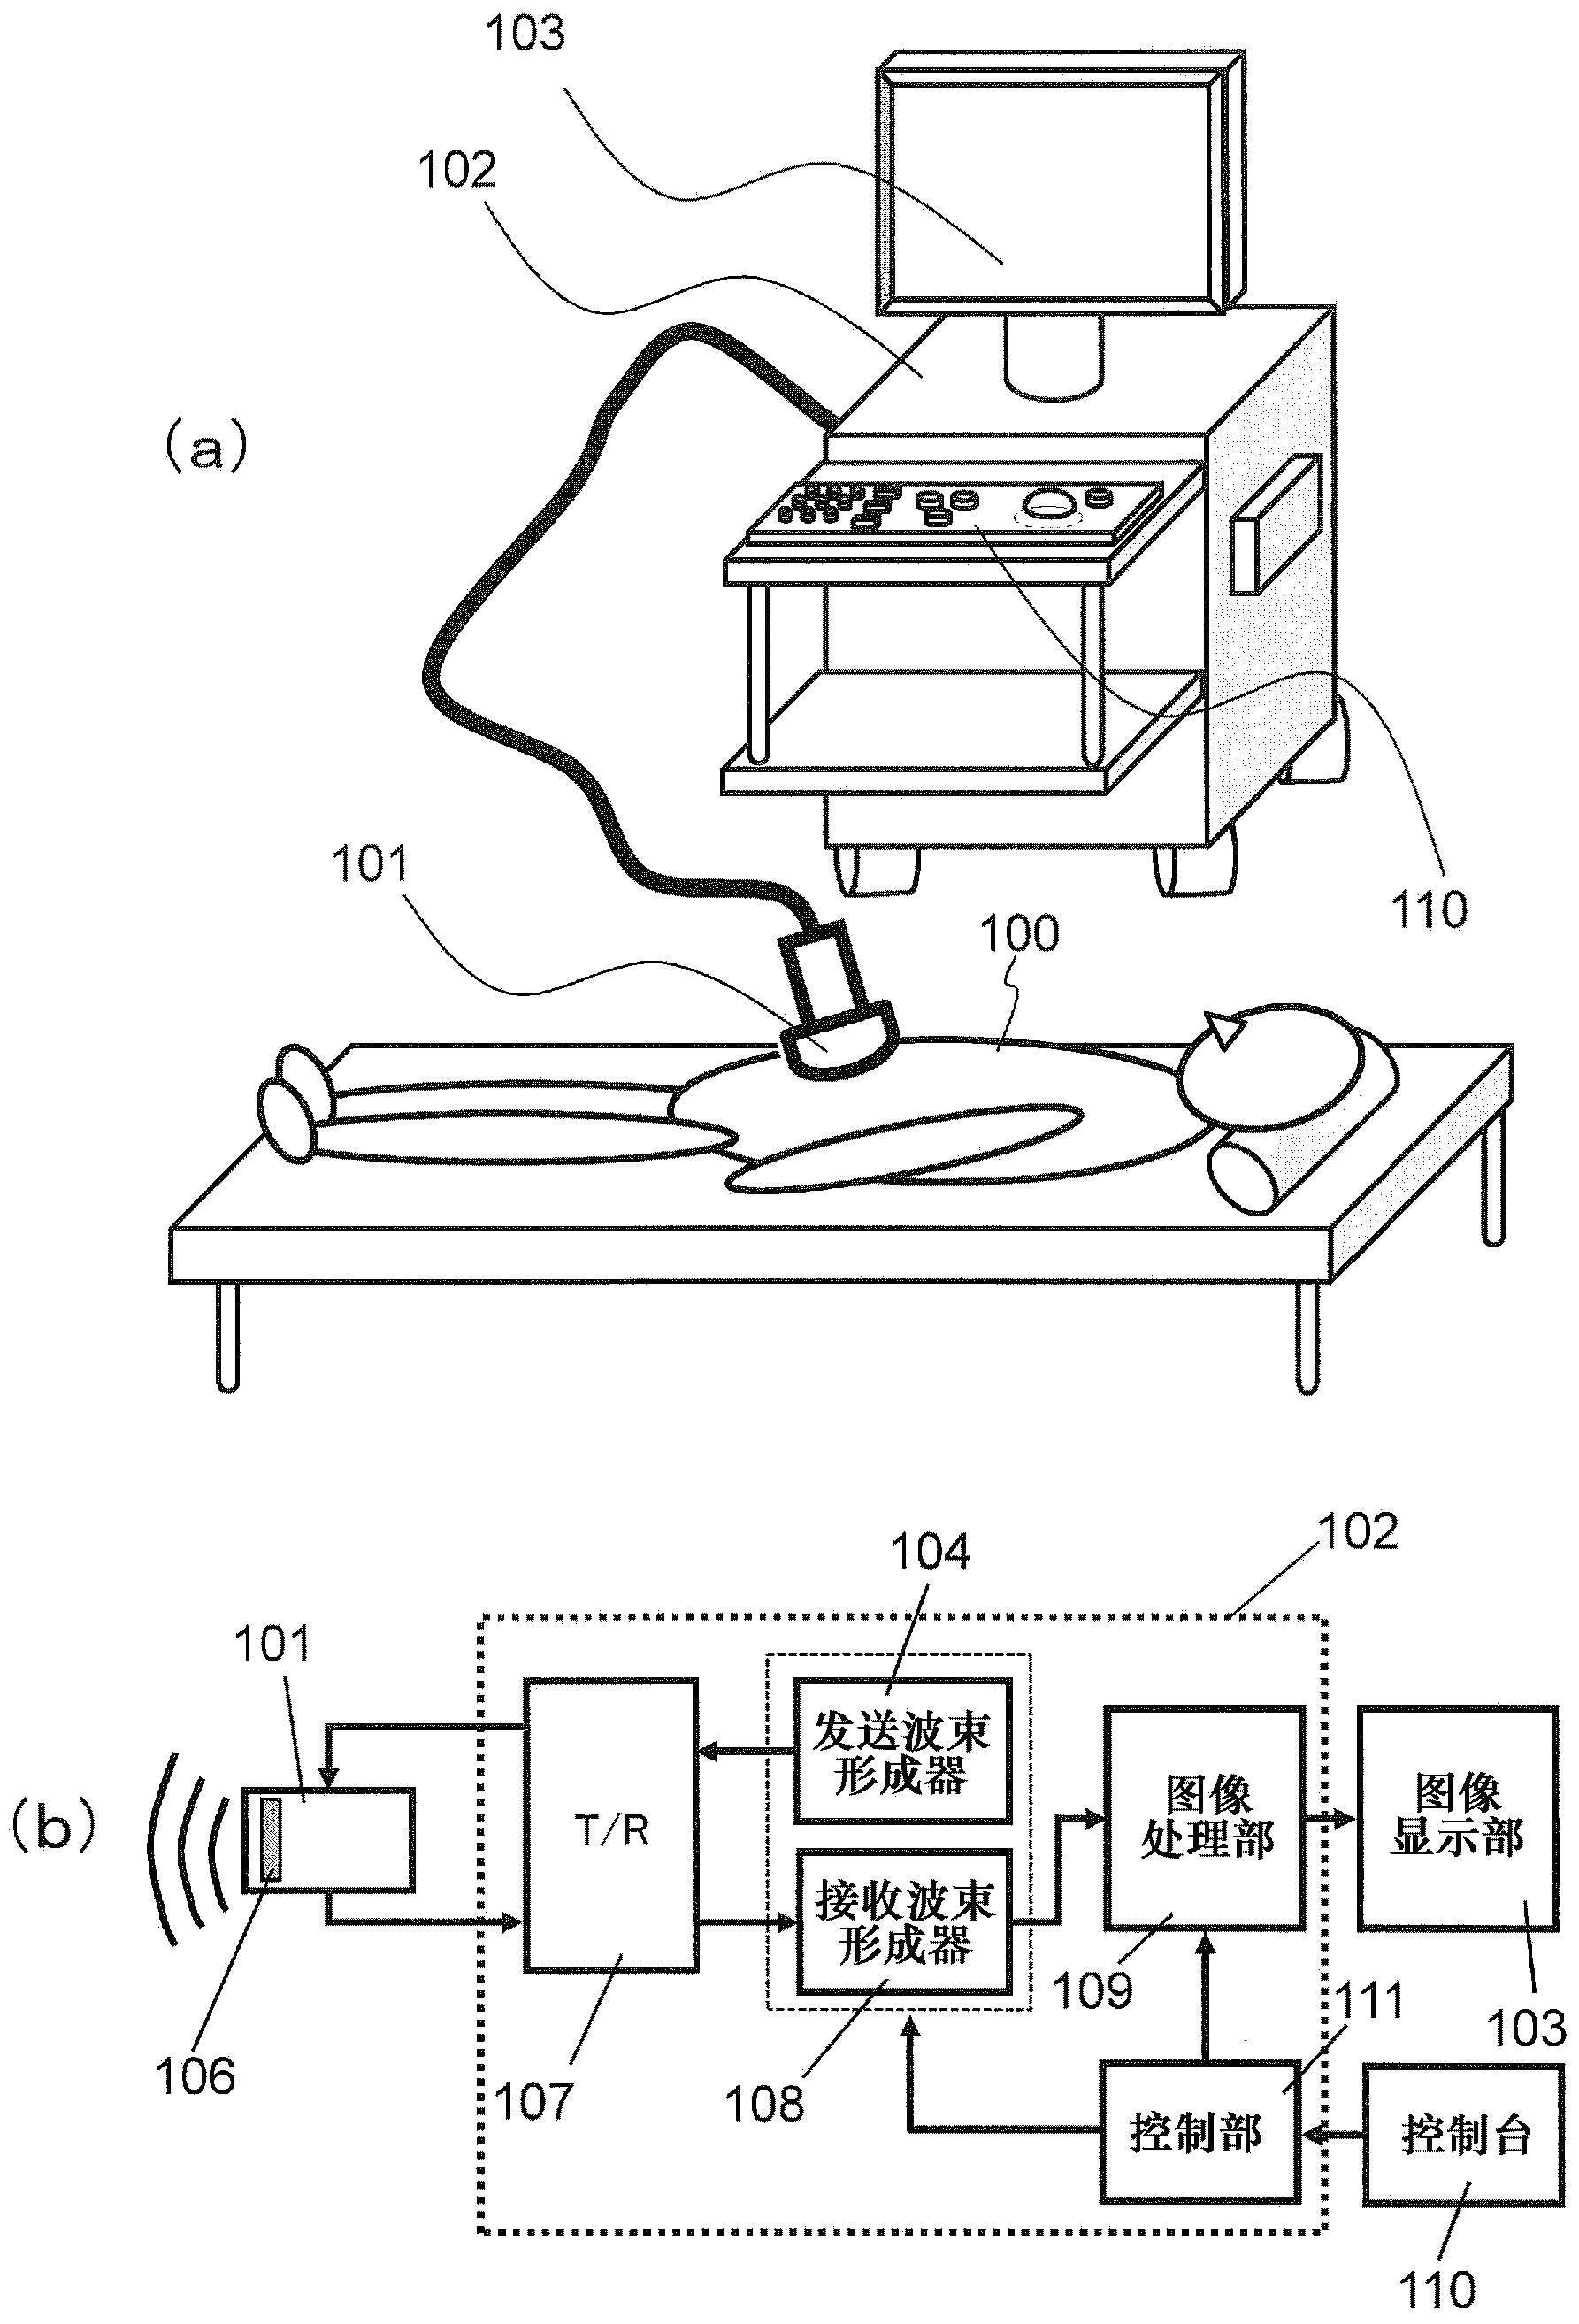 Ultrasonic imaging device